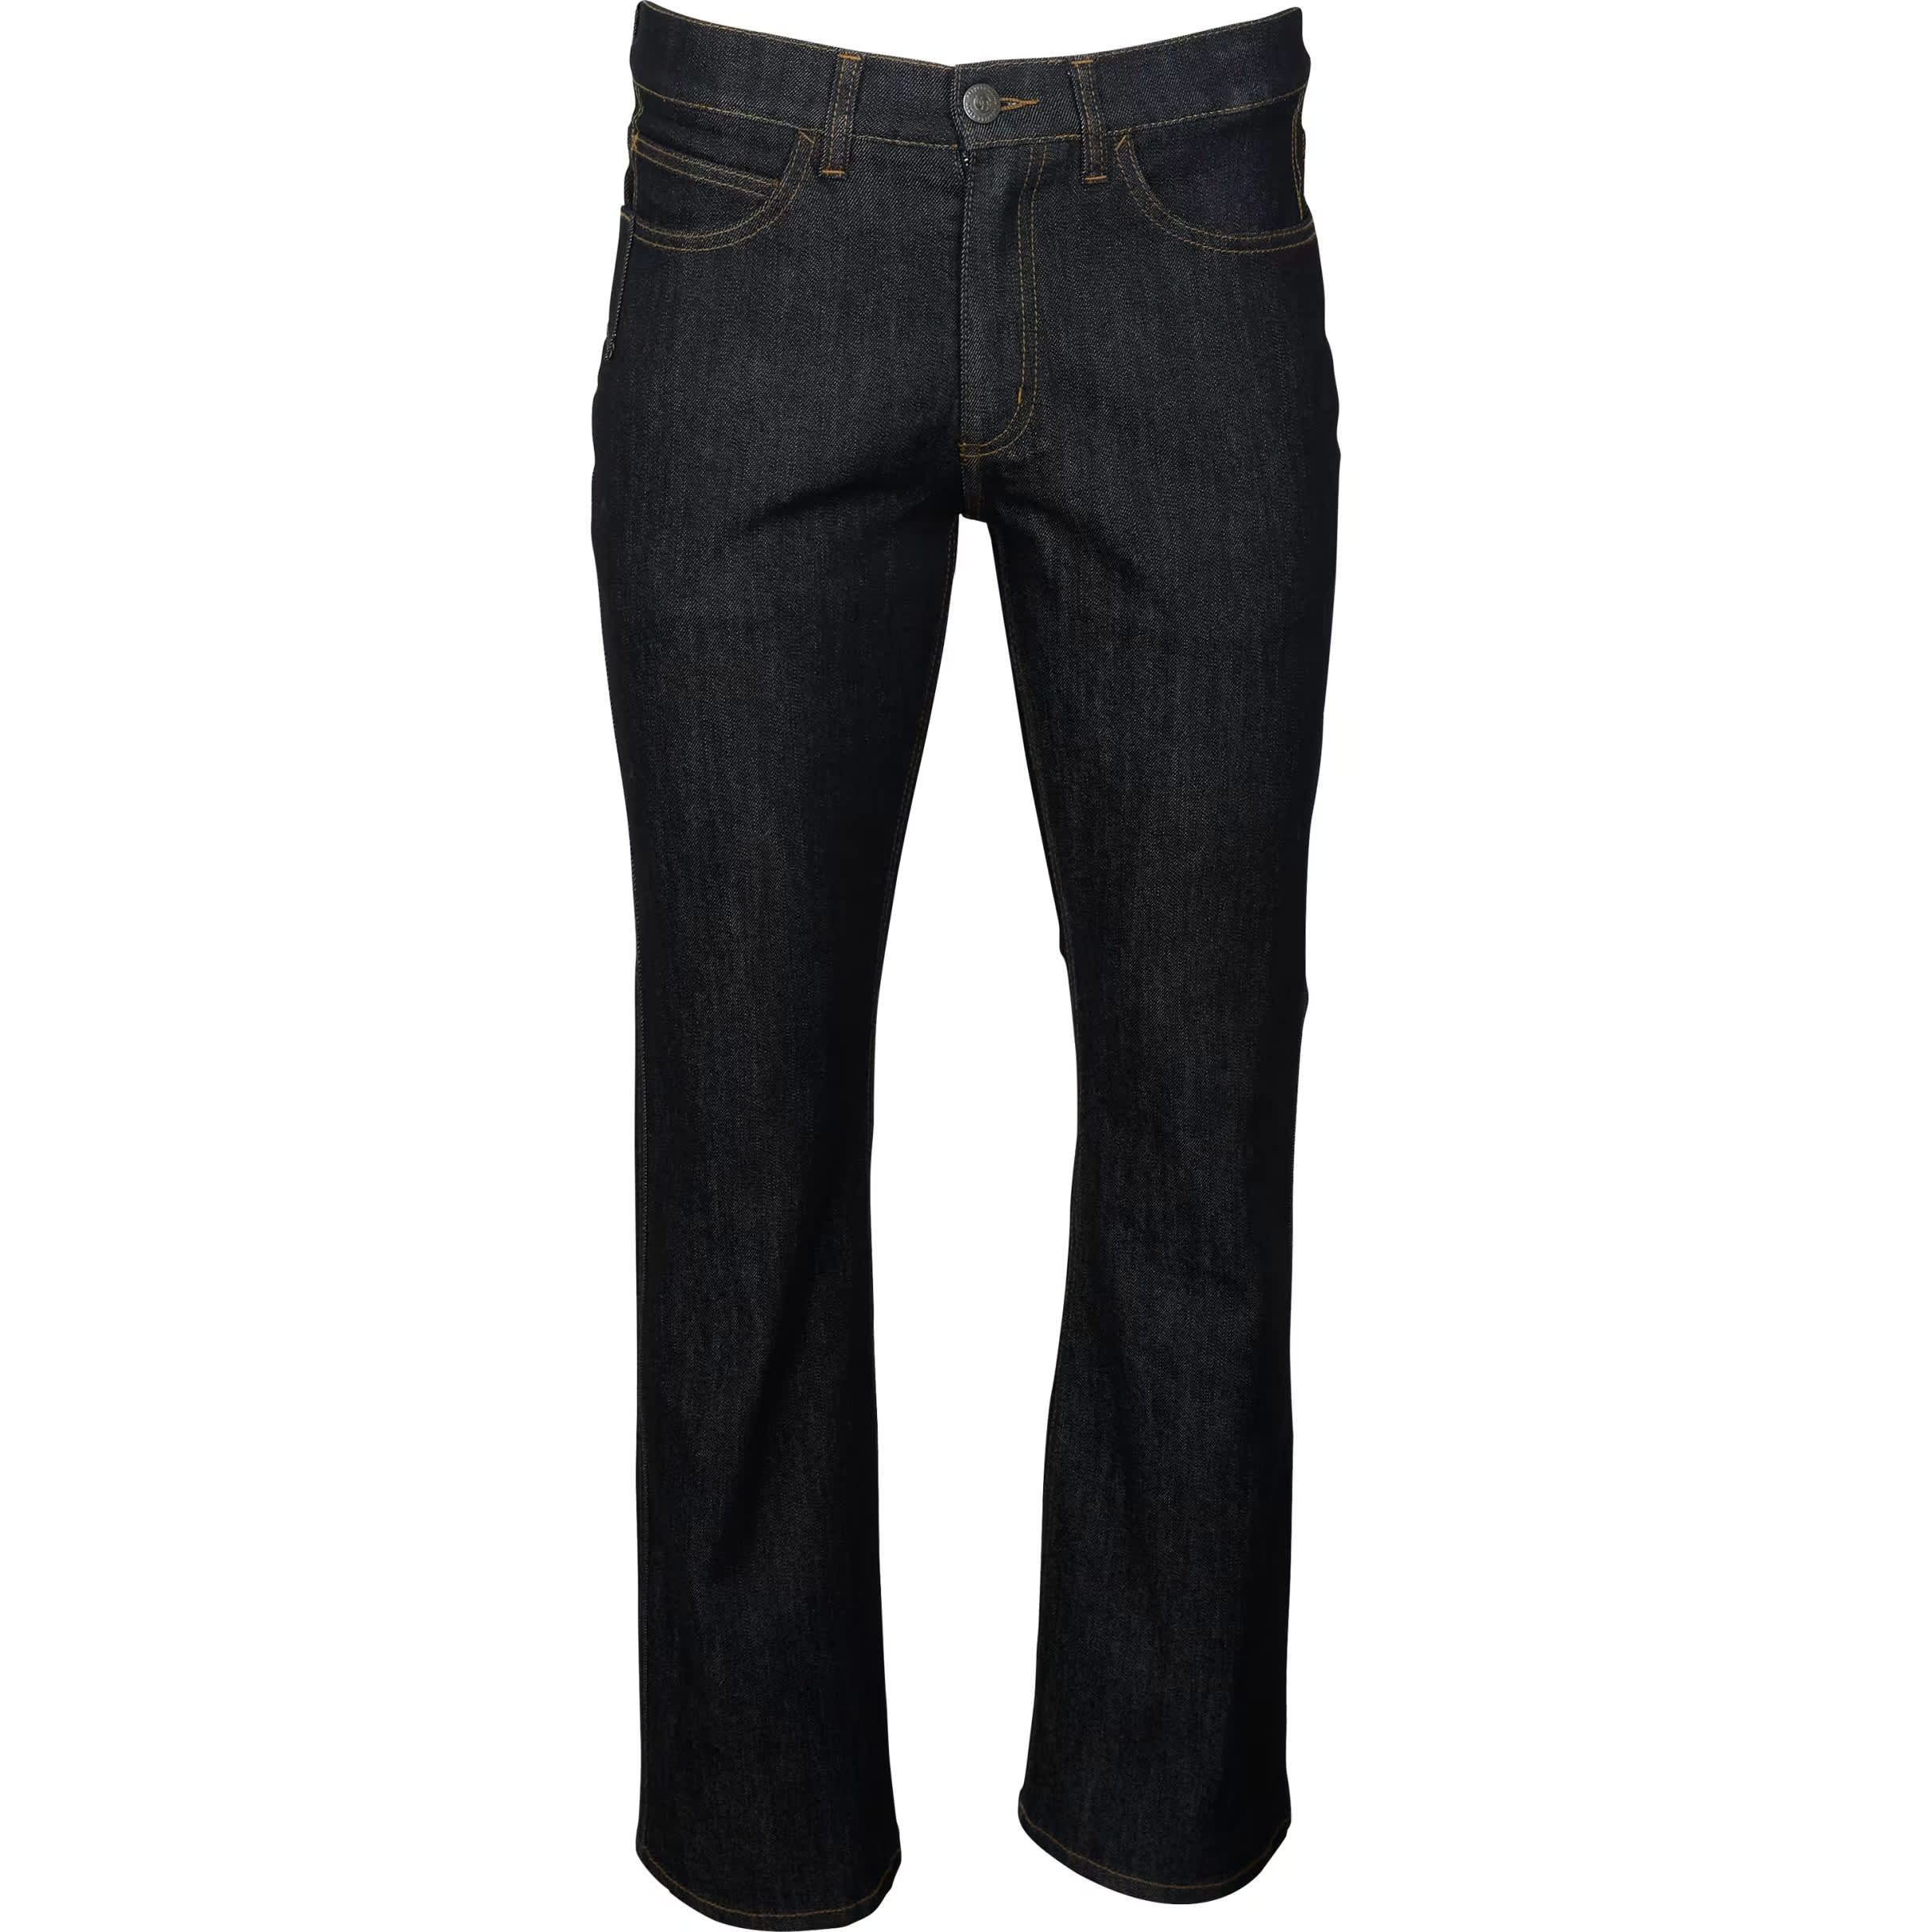 RedHead® Men's Classic Flex FIT Denim Jeans